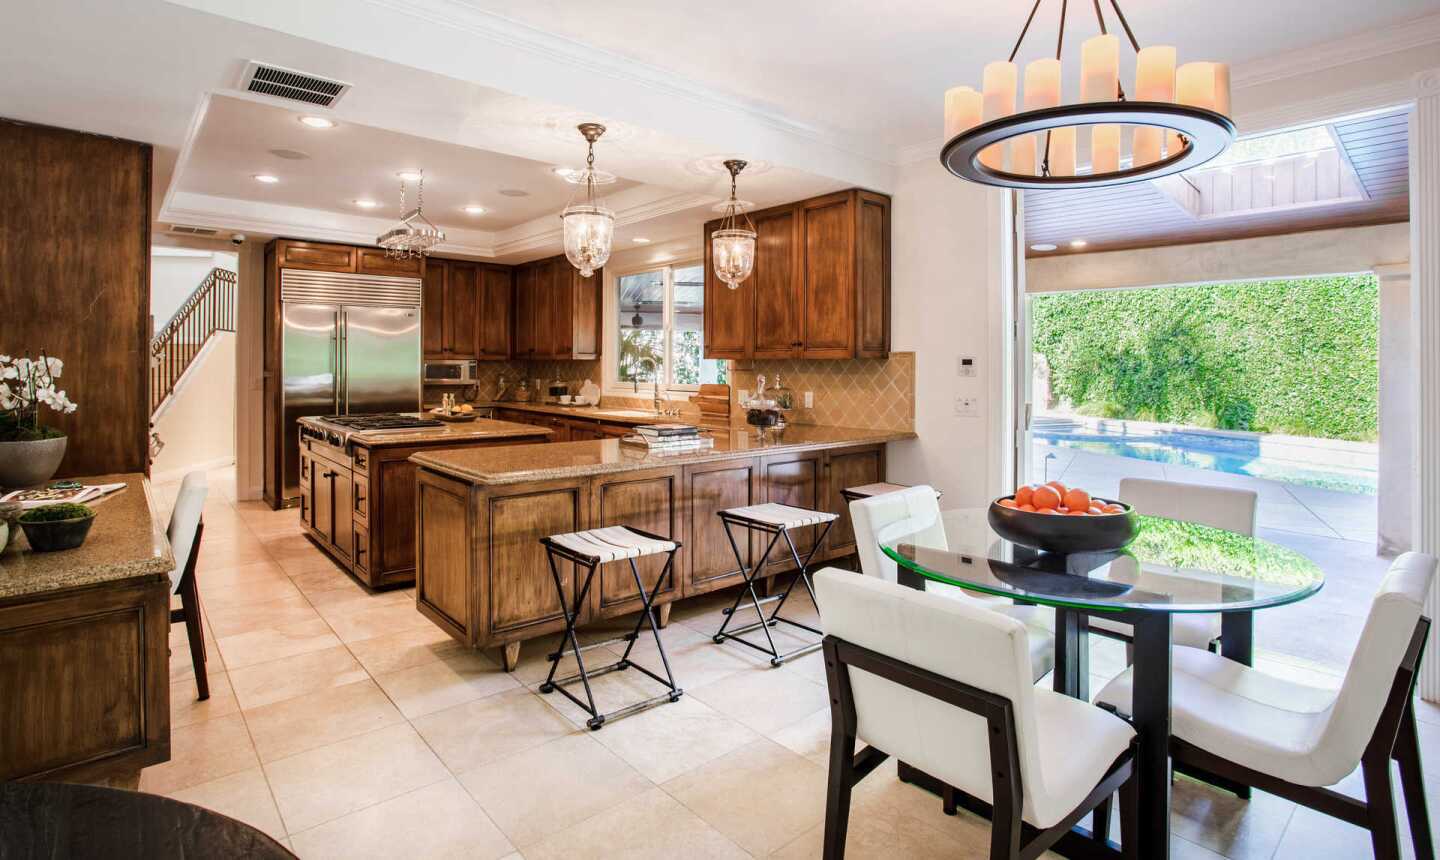 Chris Pratt and Anna Faris' marital home: the kitchen